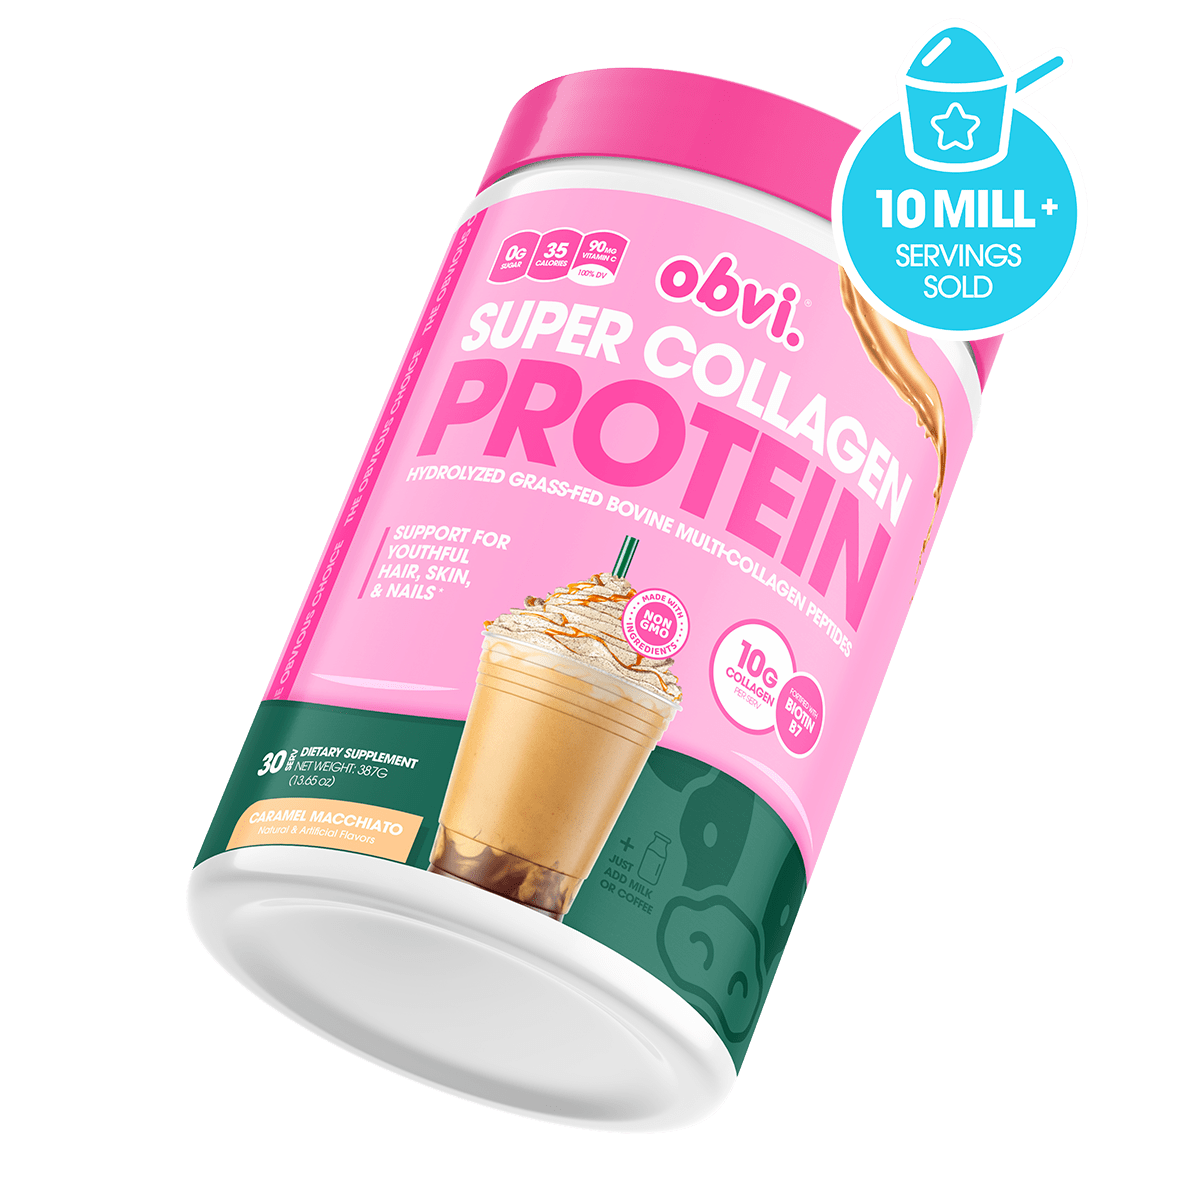 Super Collagen Protein Powder | Caramel Macchiato